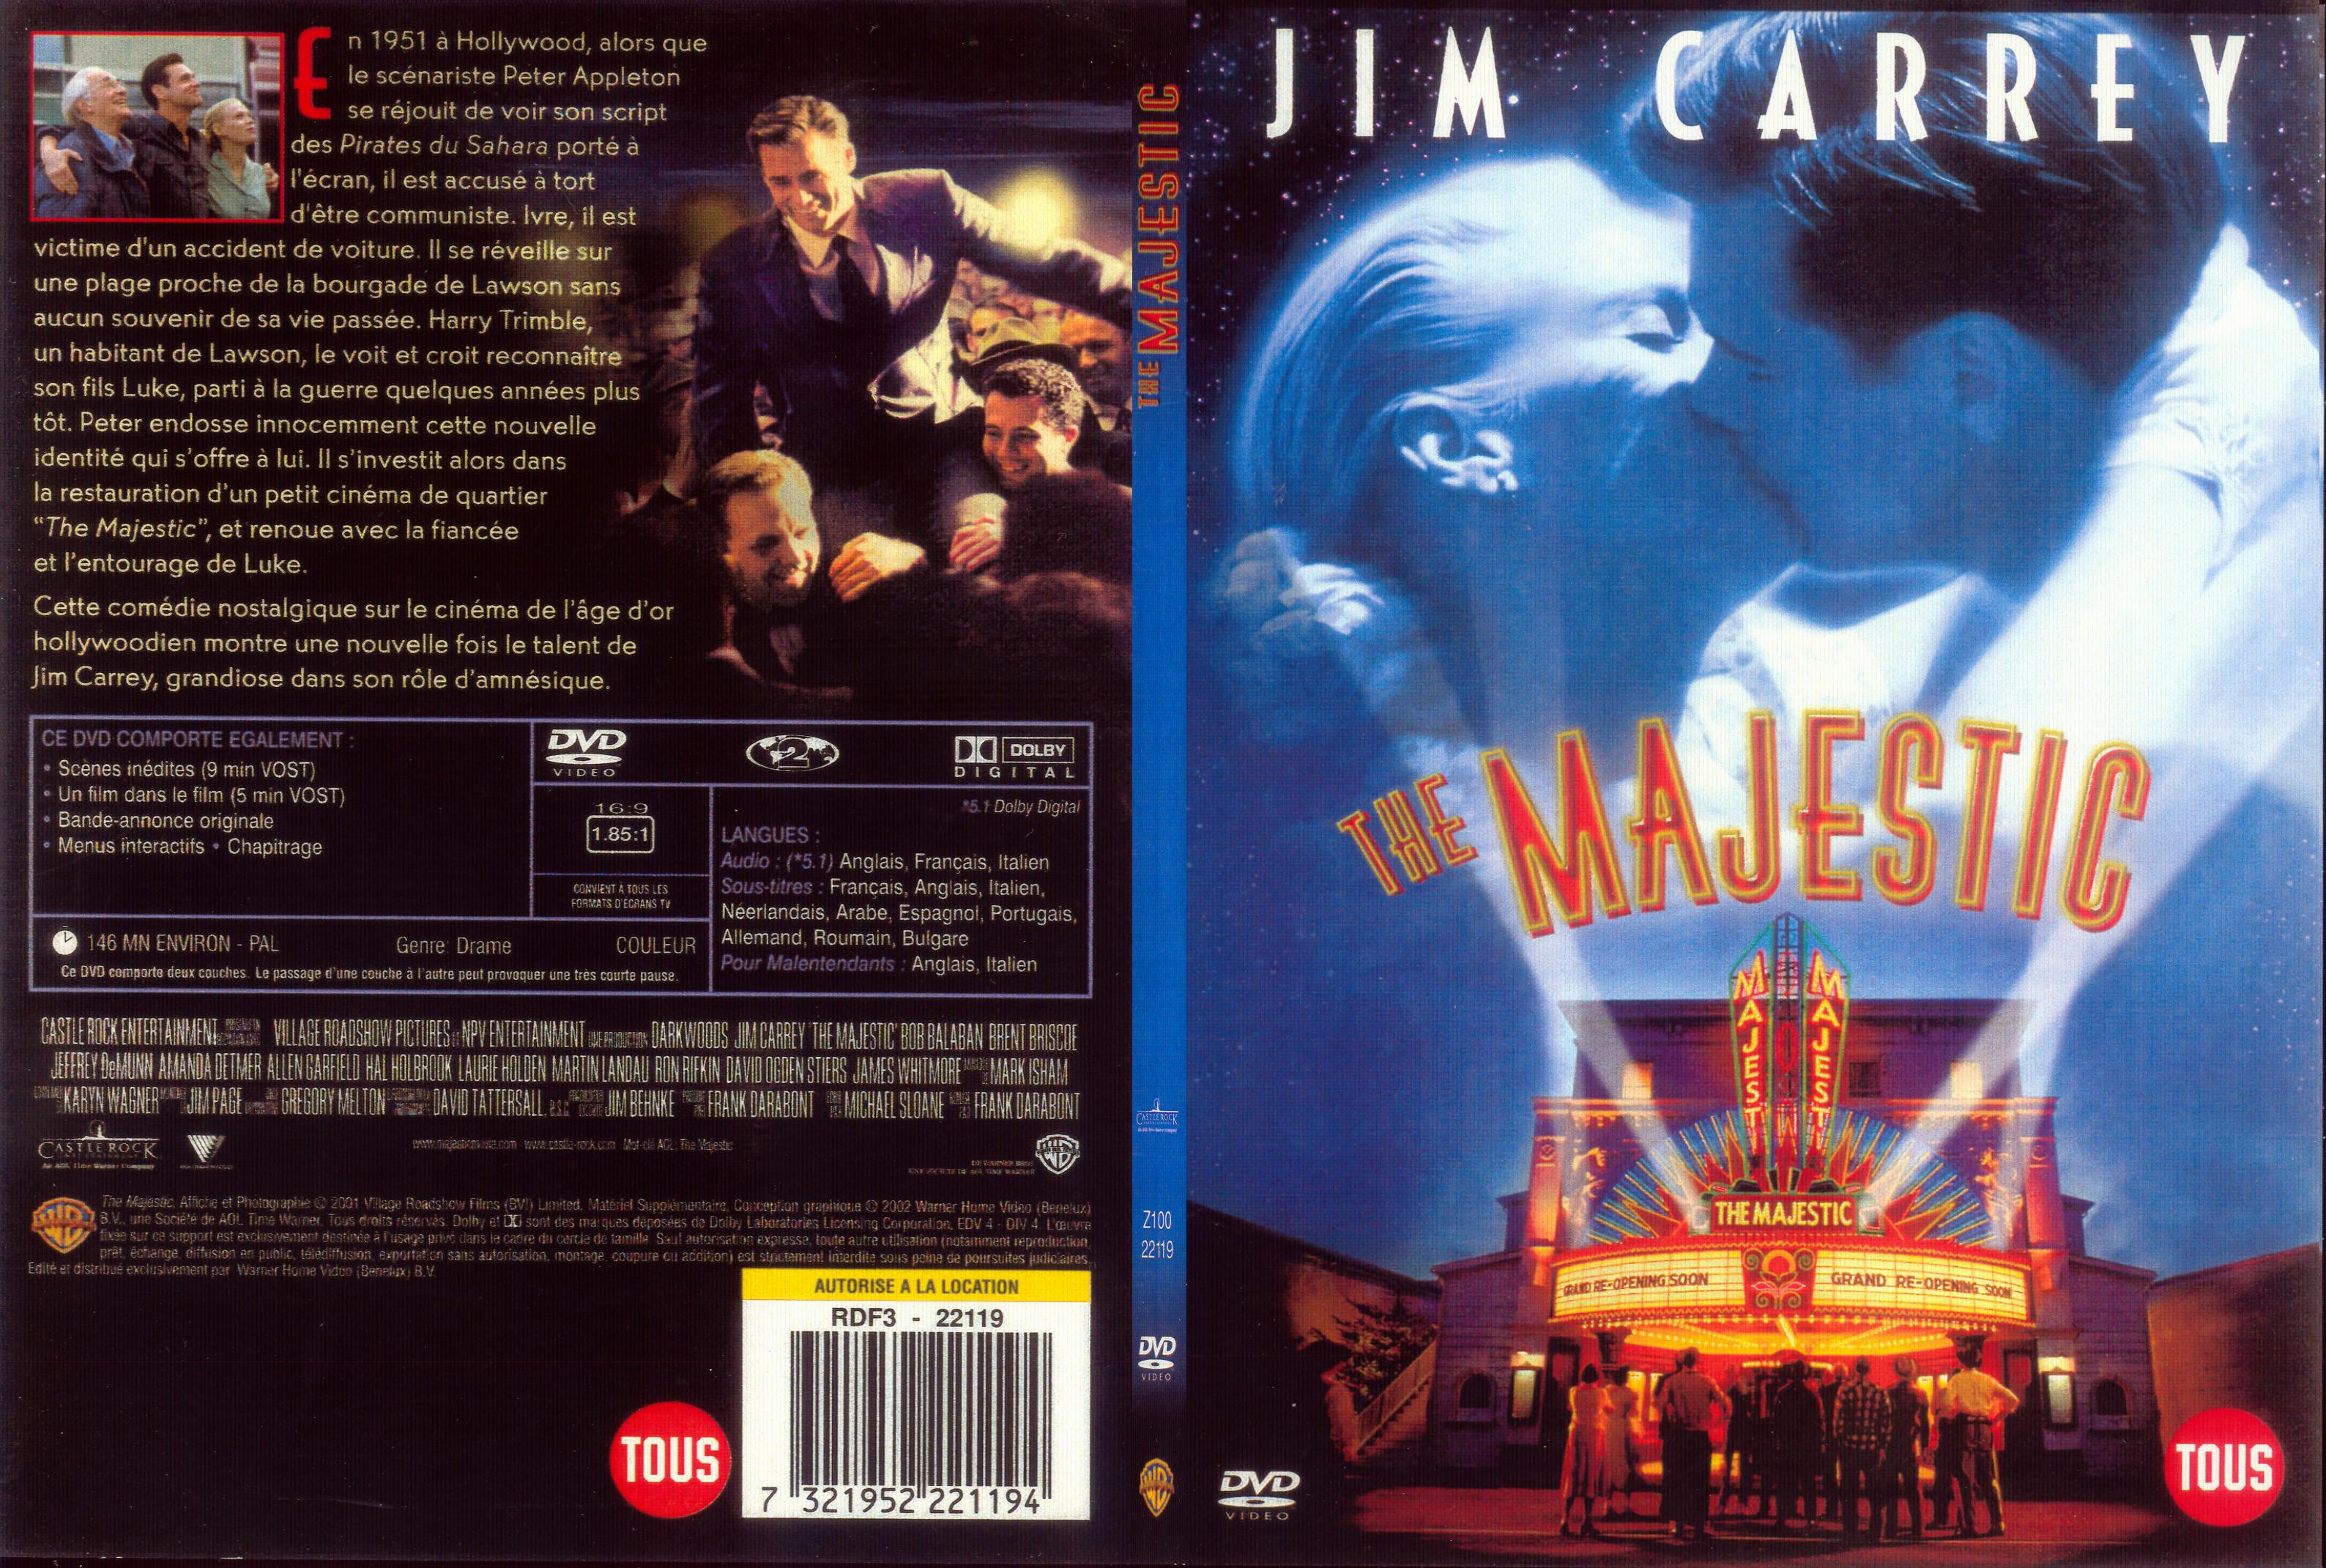 Jaquette DVD The majestic - SLIM